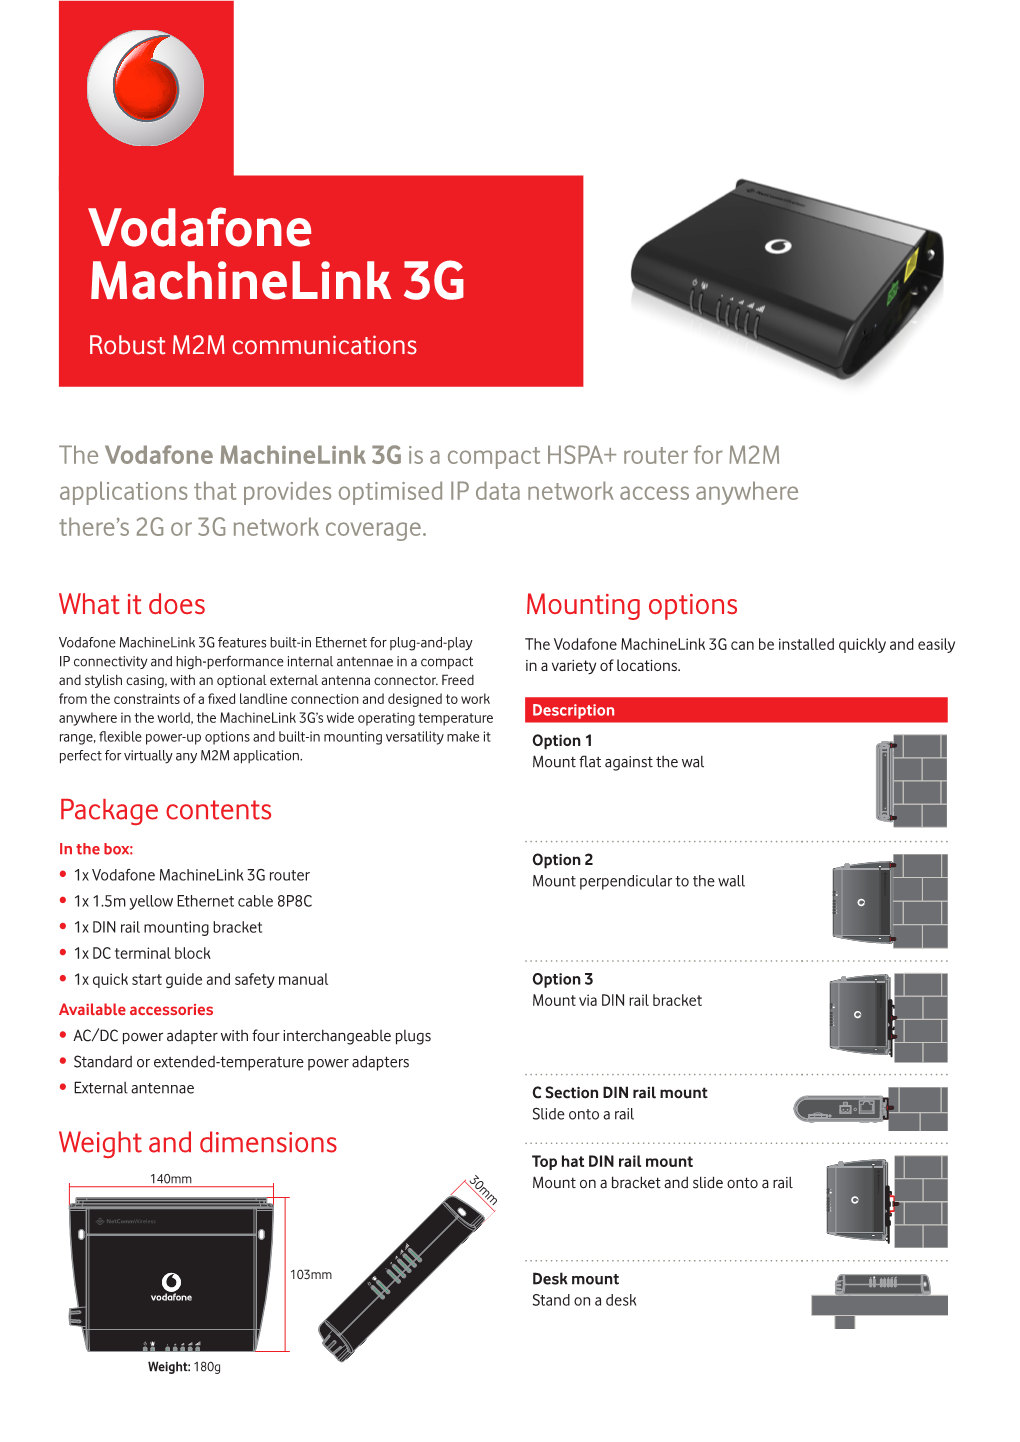 Vodafone Machinelink 3G Robust M2M Communications